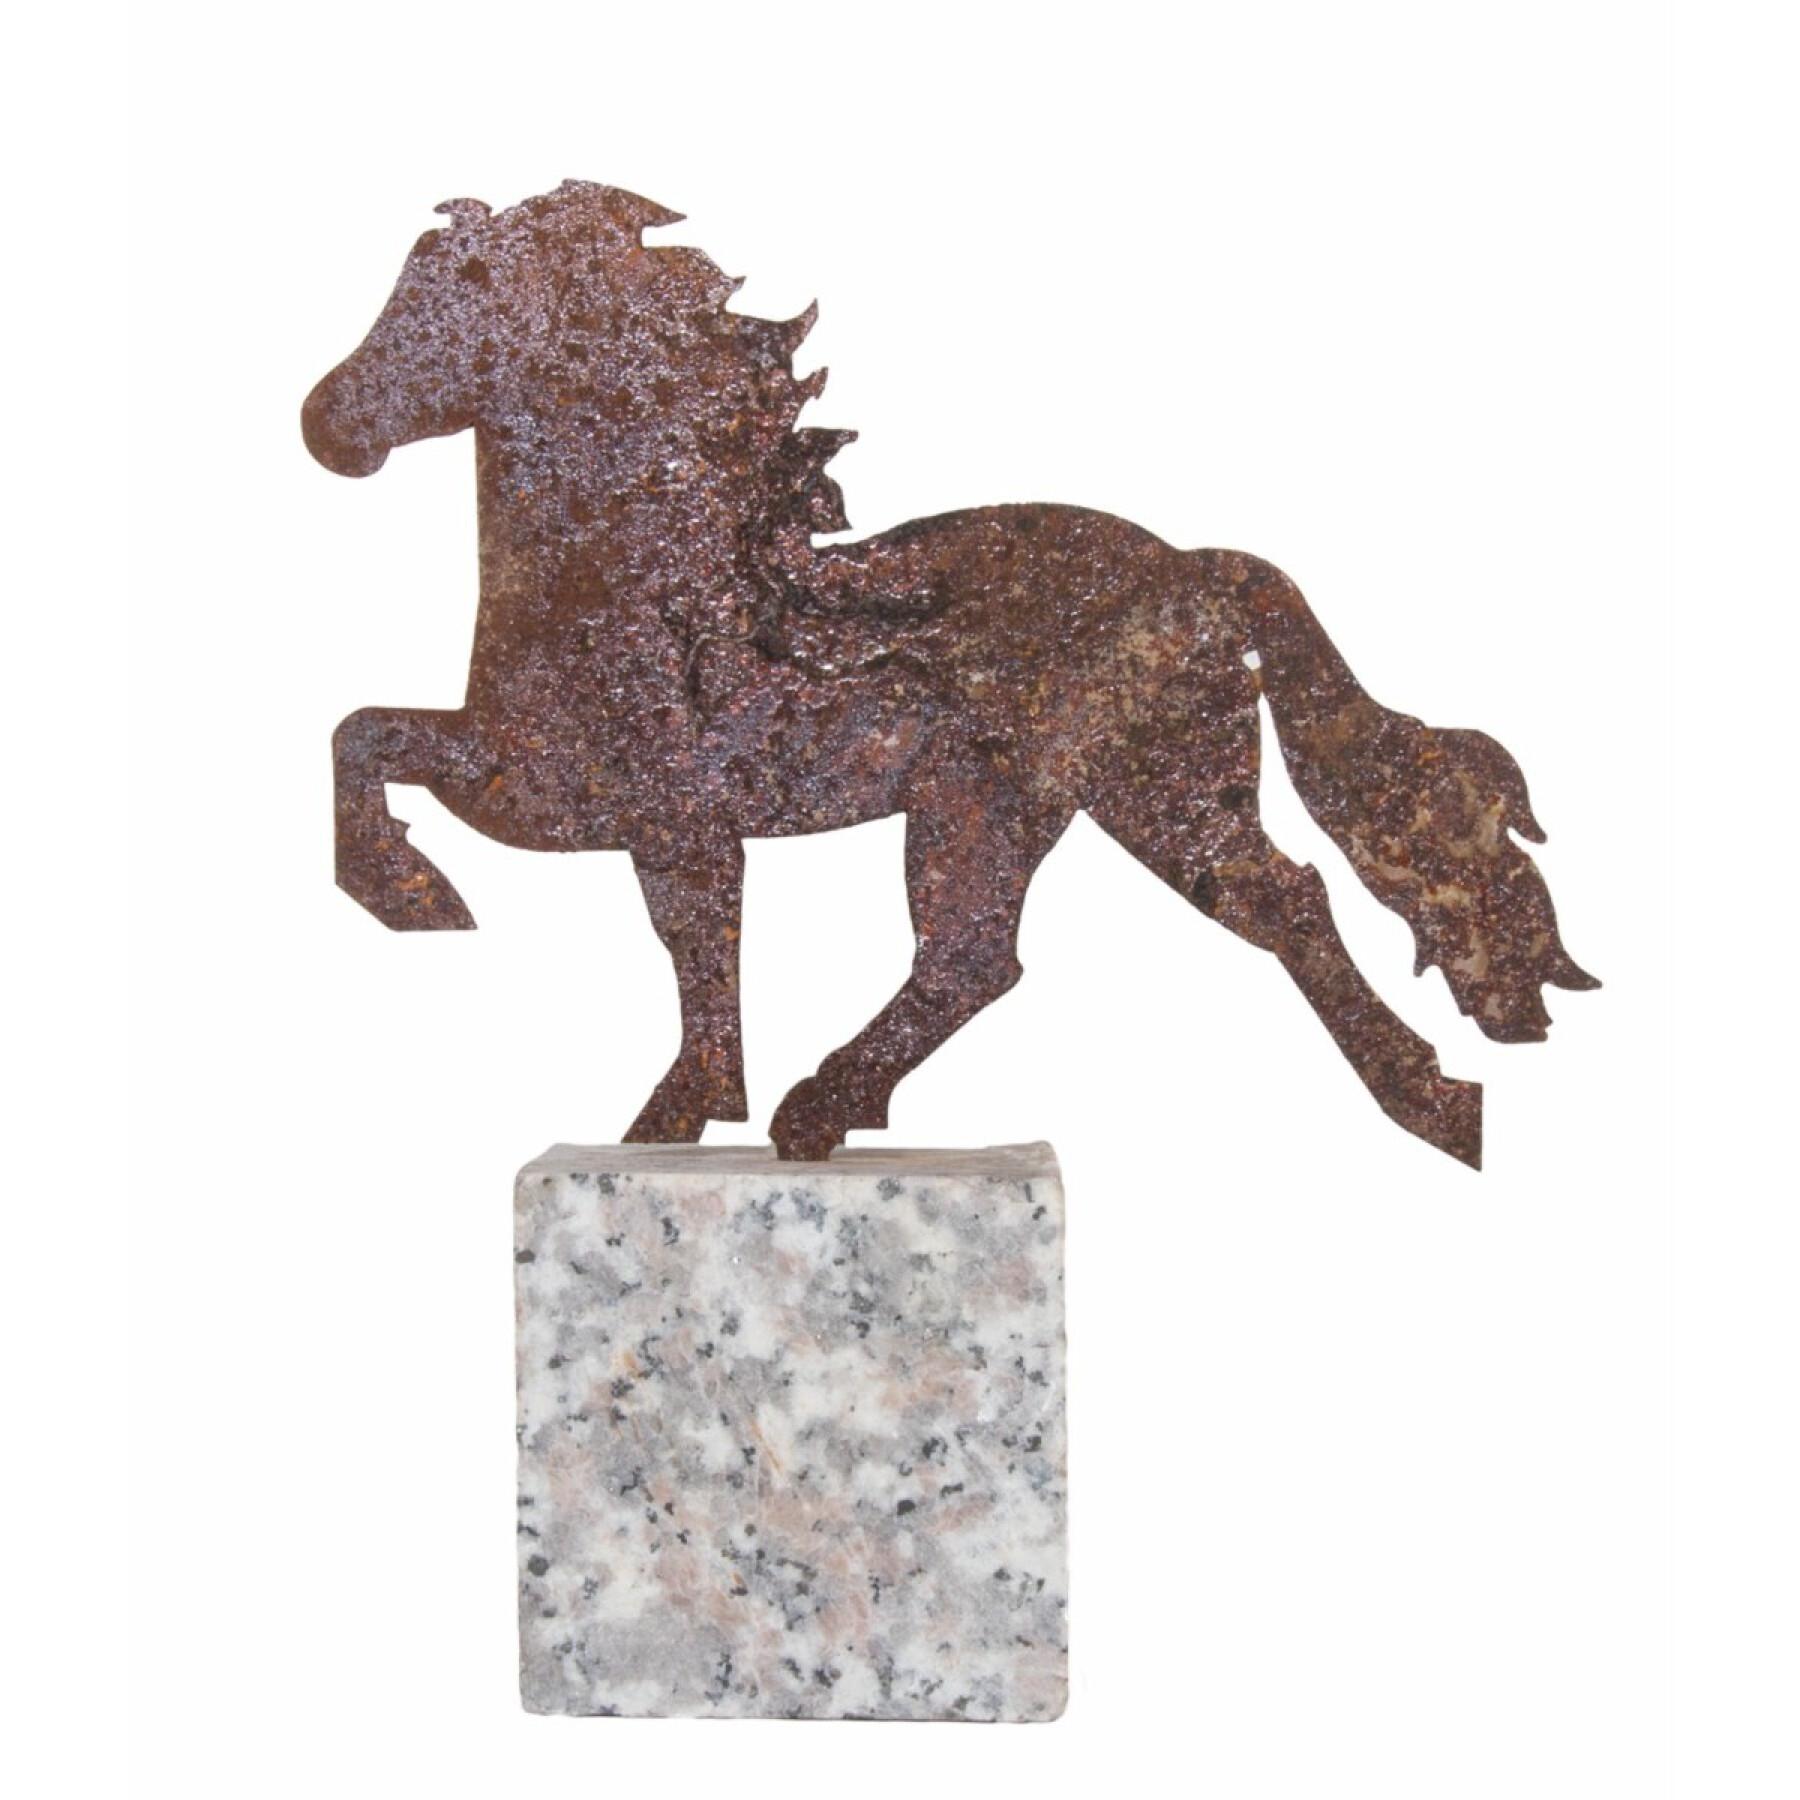 Figurine en acier inoxydable sur pierre de granit polie Karlslund